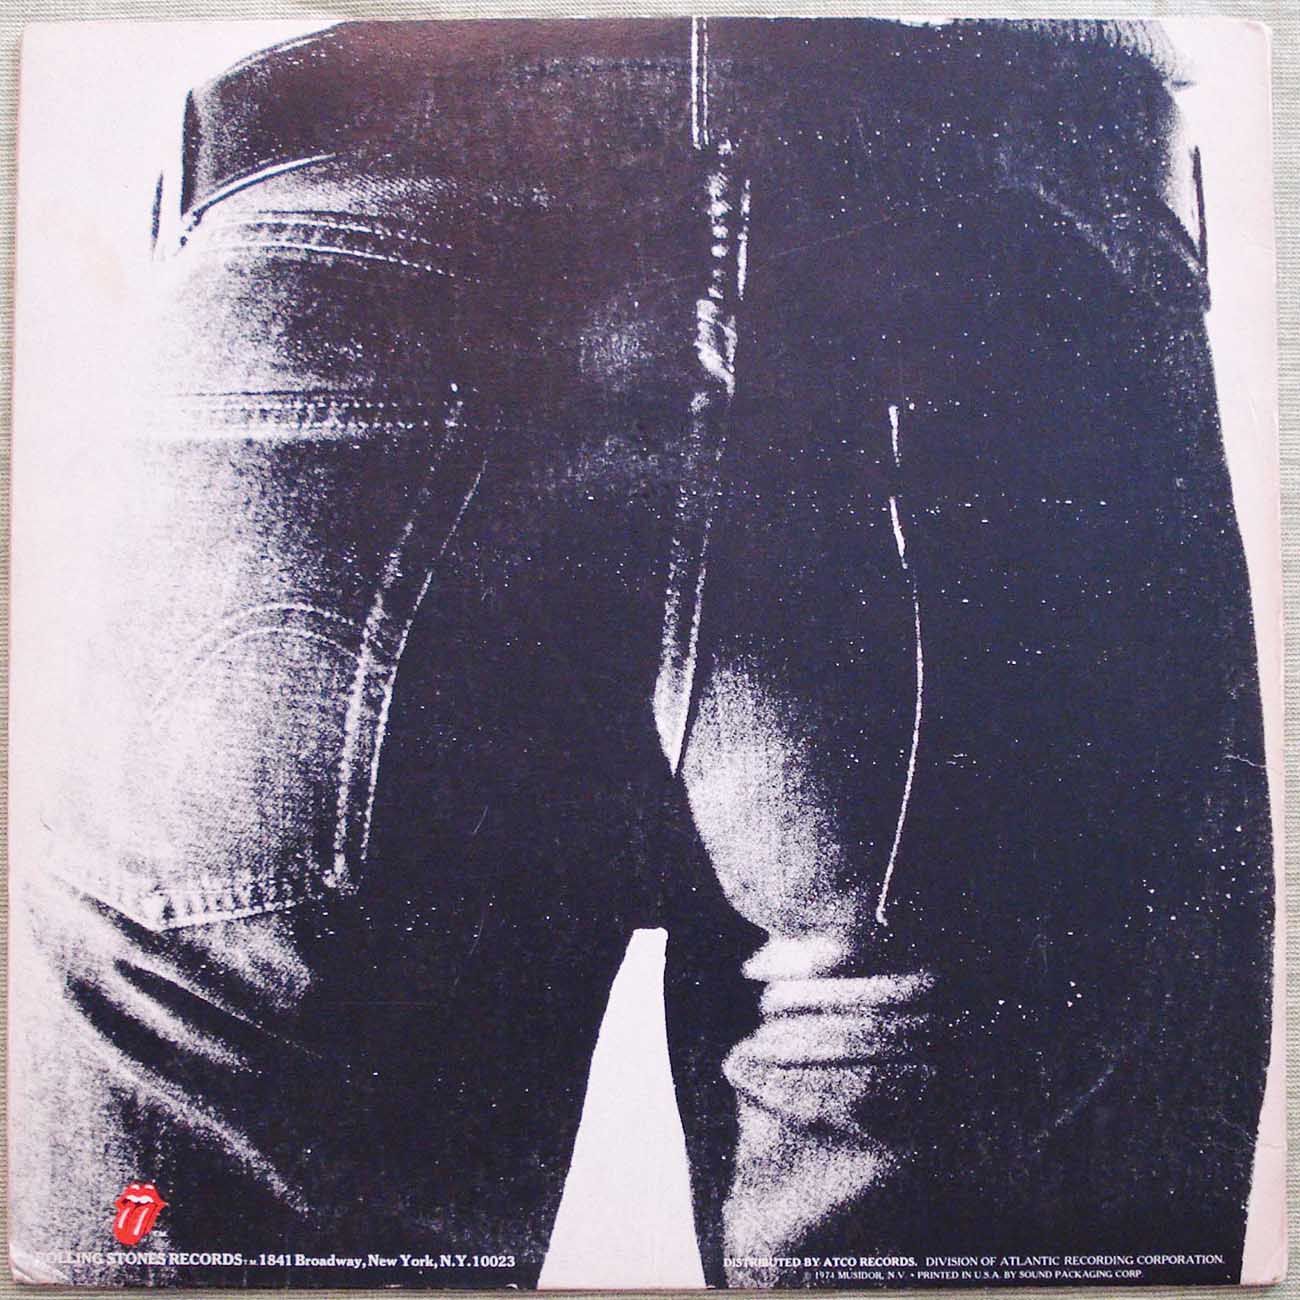 The Rolling Stones - Sticky Fingers (1971) Vinyl LP 33rpm COC59100